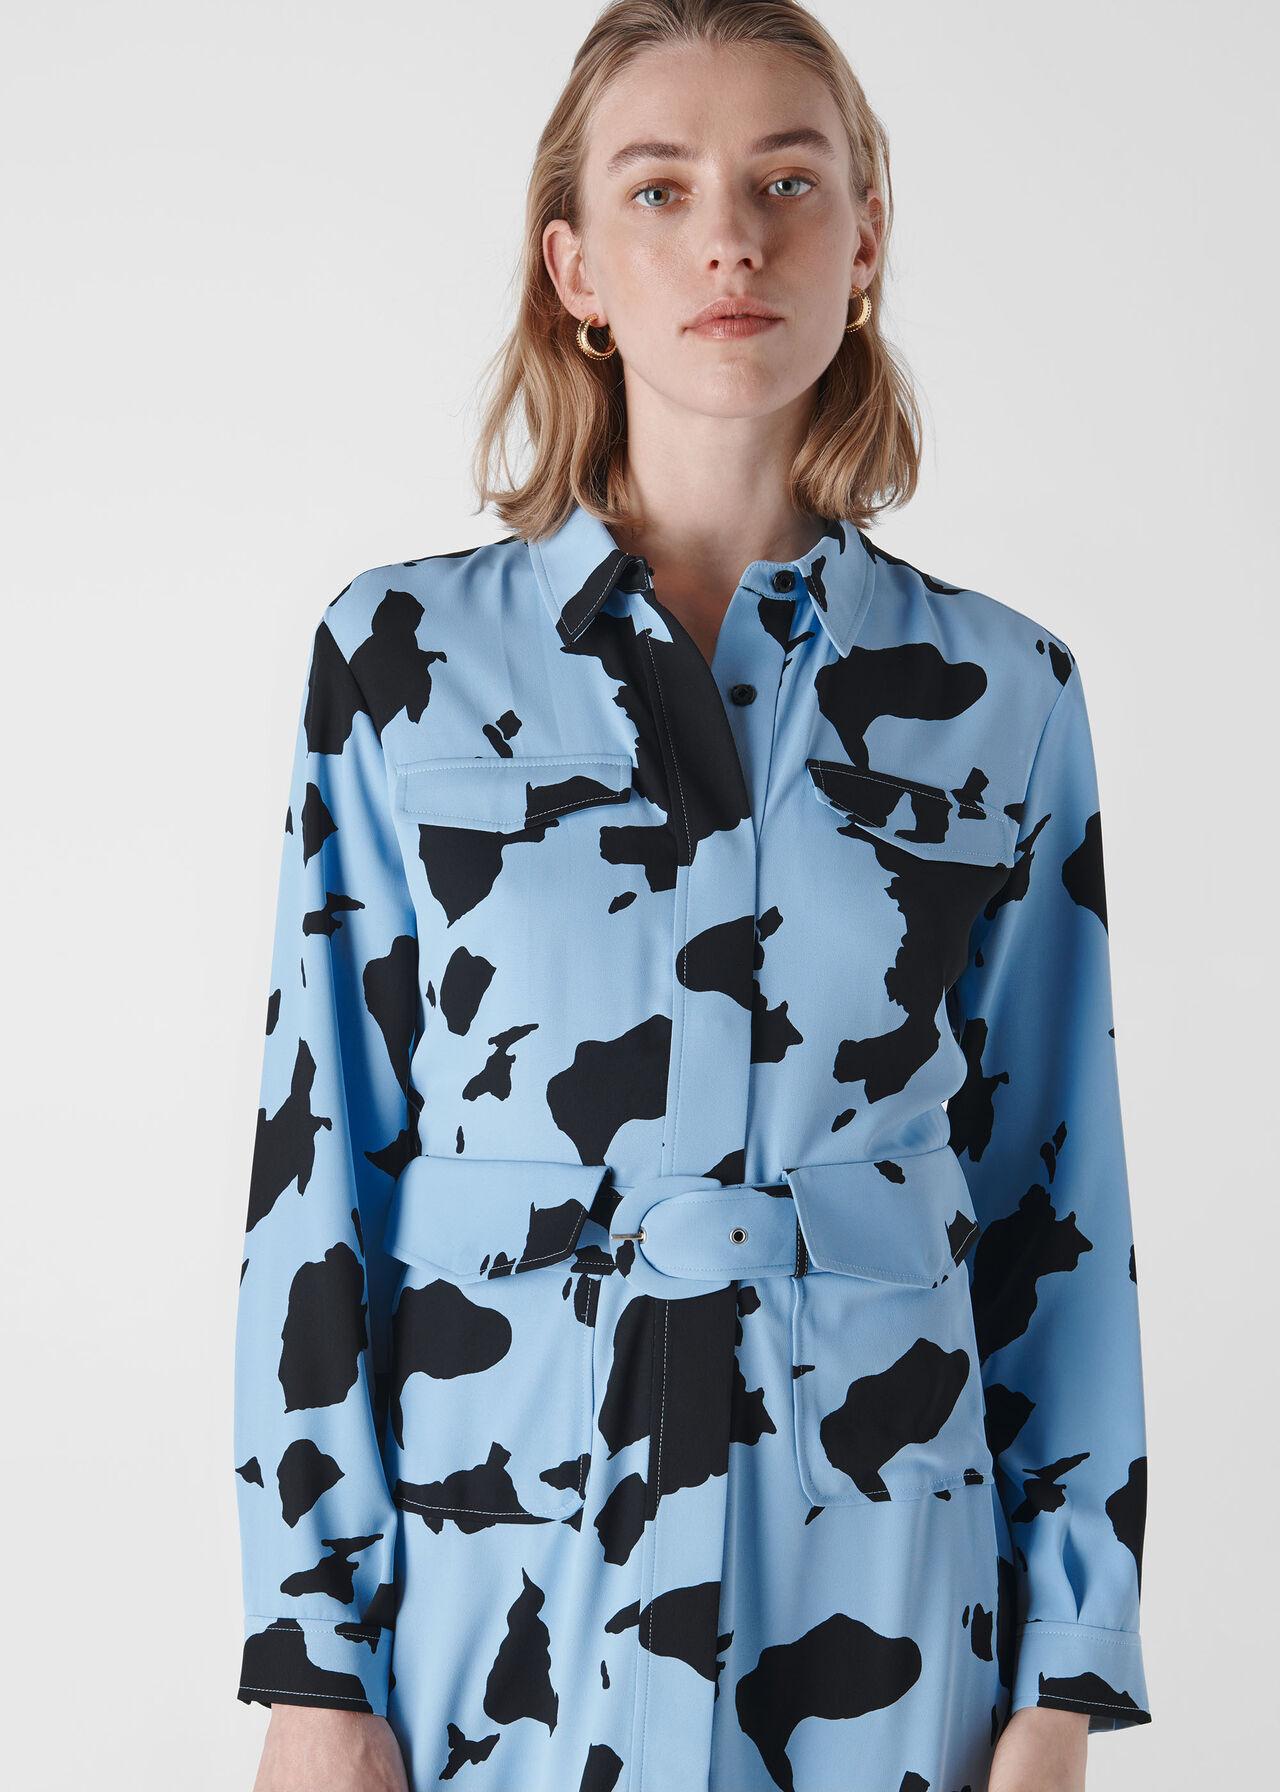 Cow Print Military Dress Blue/Multi